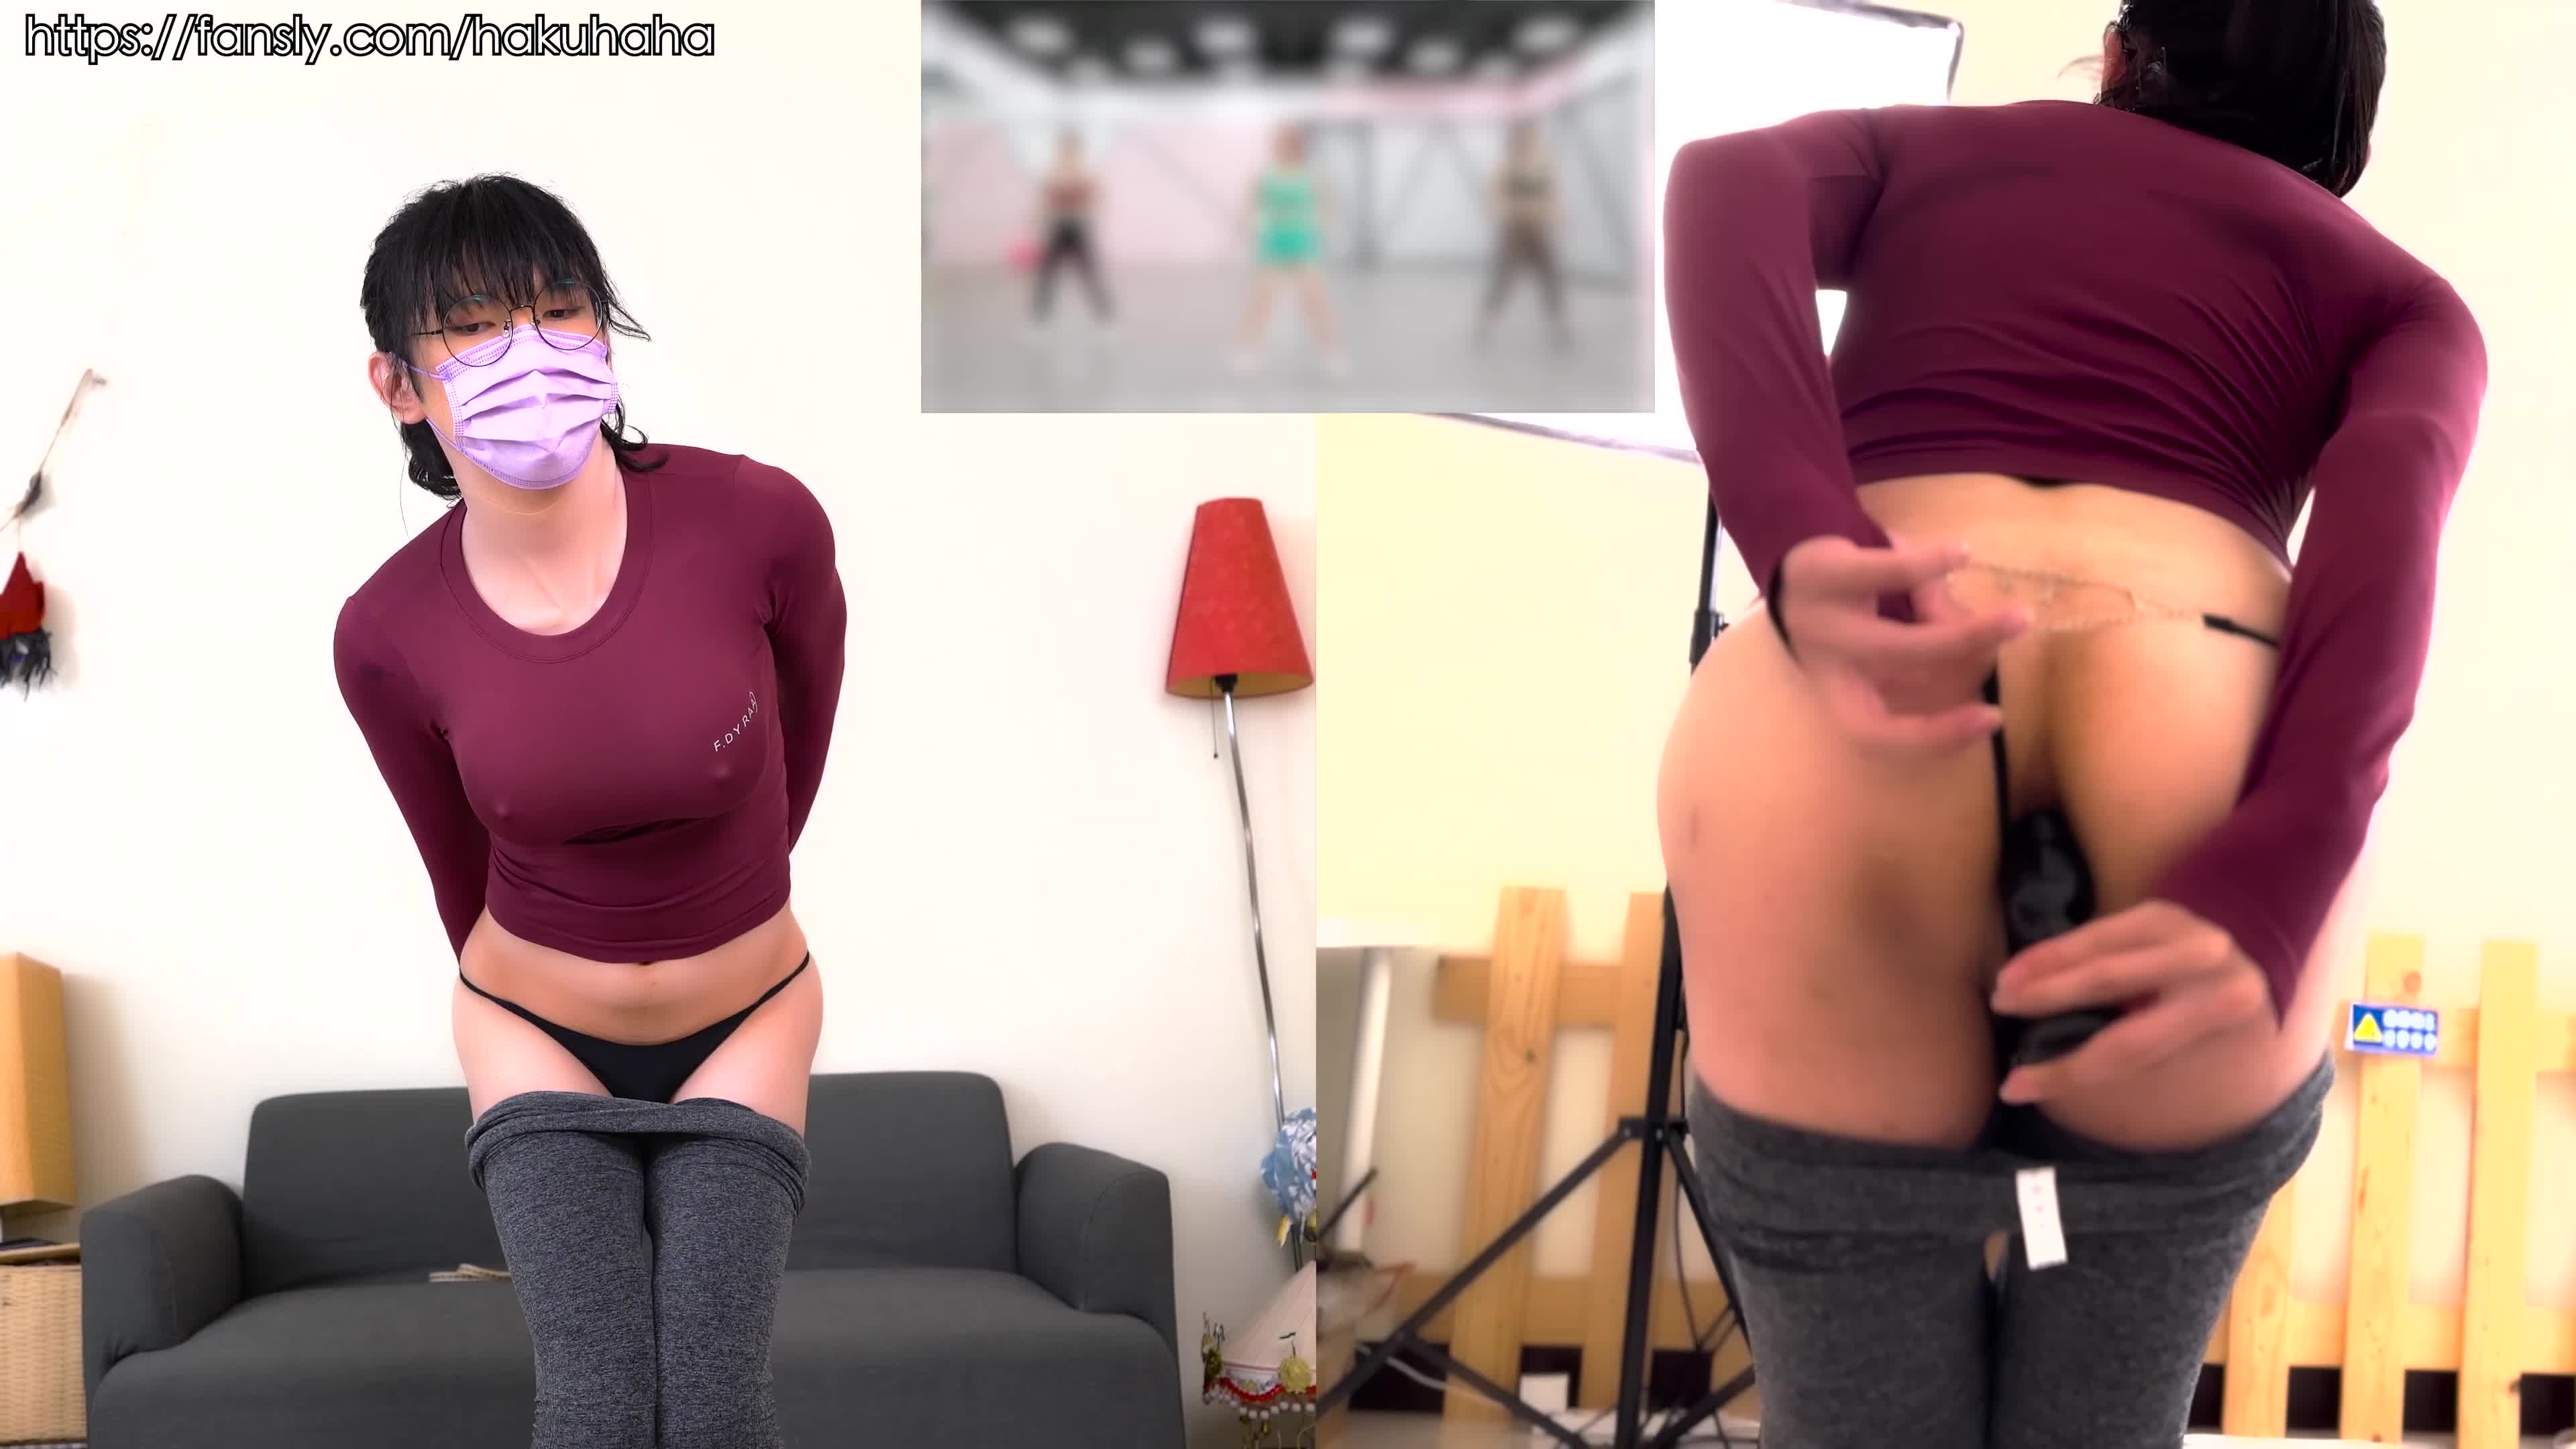 Wearing Yoga Pants Aerobics Stuffing Toy Into Ass Having An Orgasm